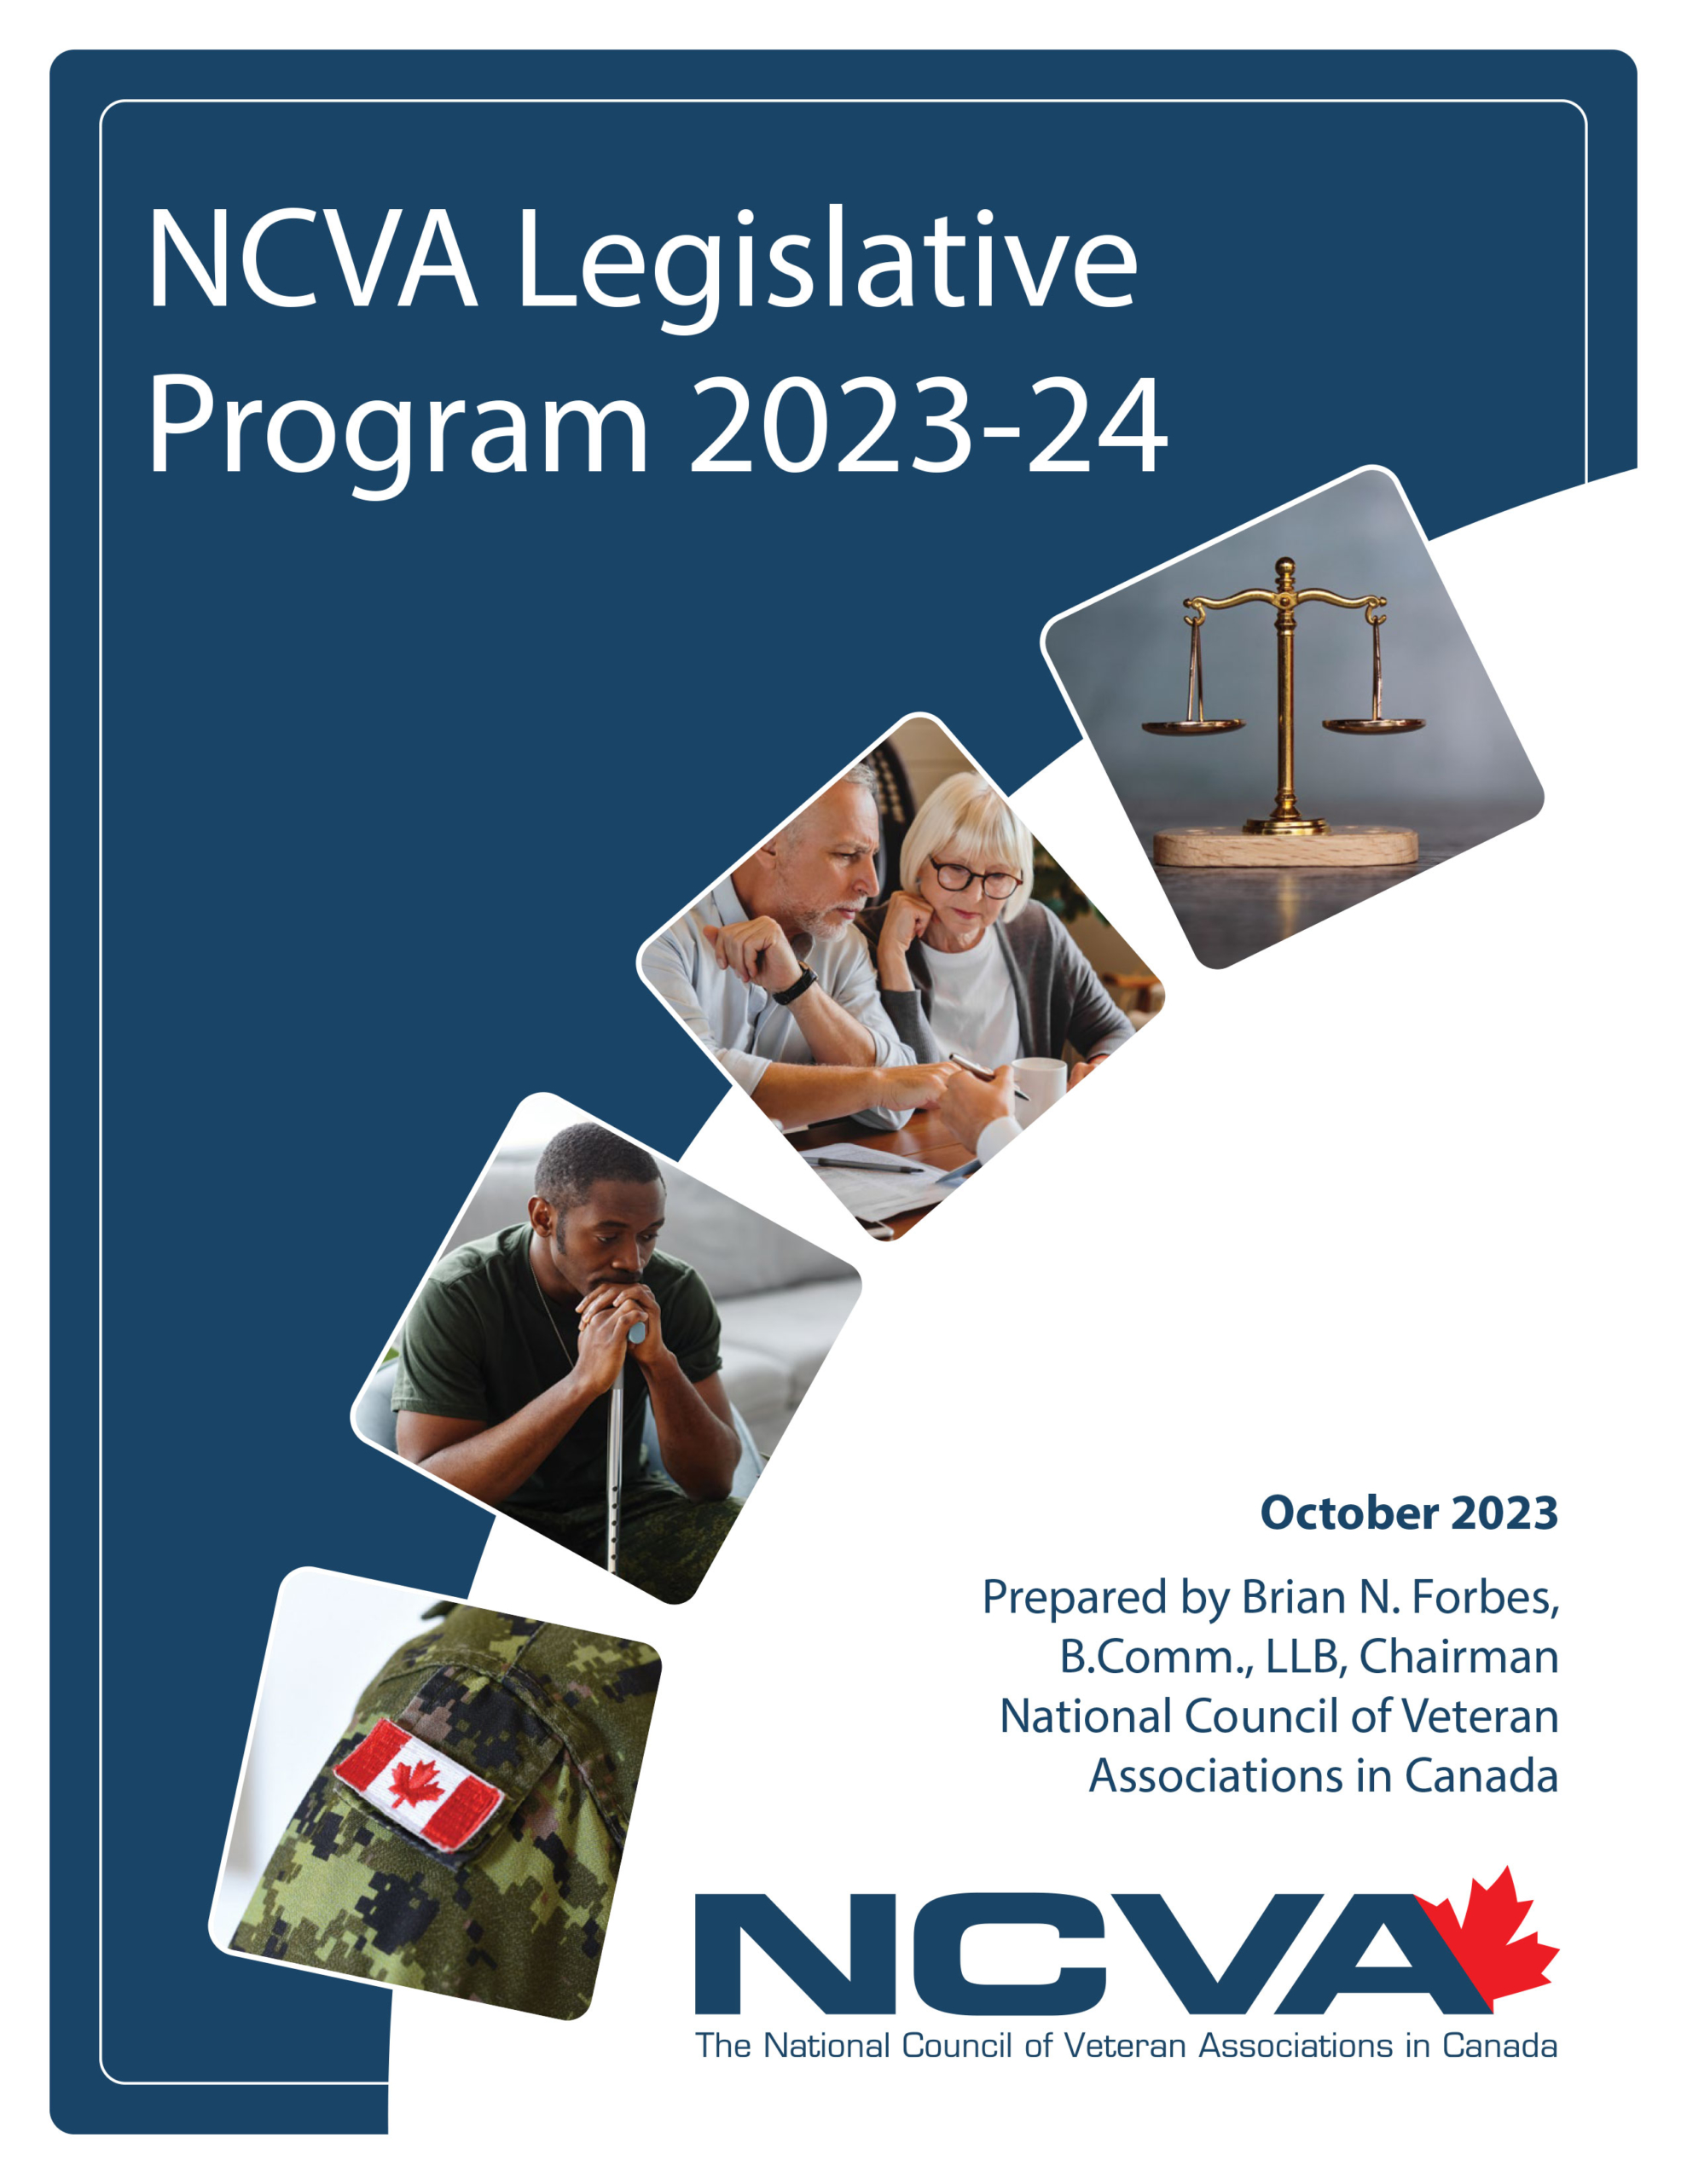 The cover of the 2023-2024 NCVA Legislative Program.